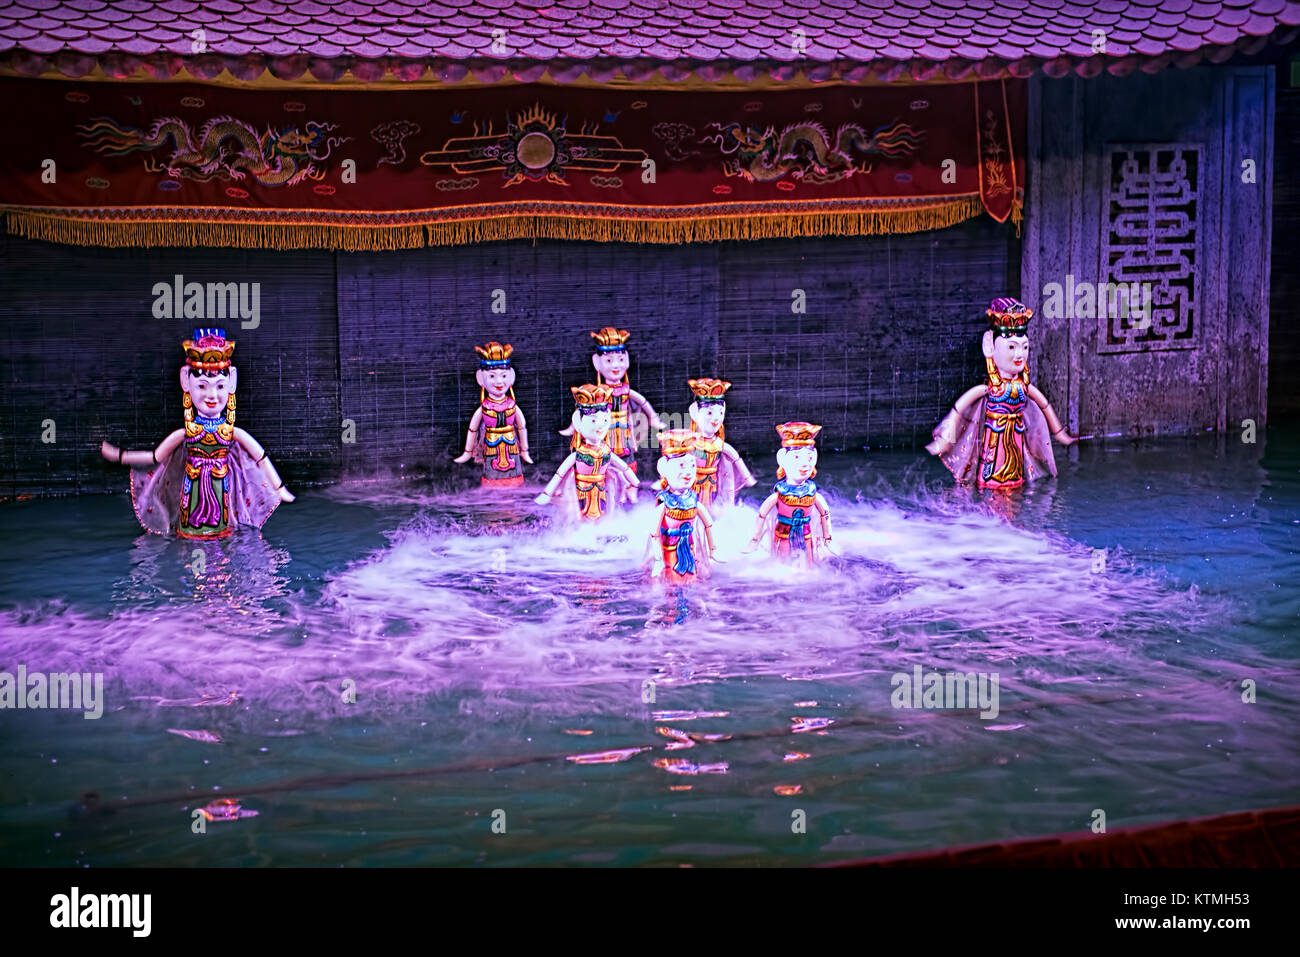 Water puppet show in Vietnam under purple lights Stock Photo